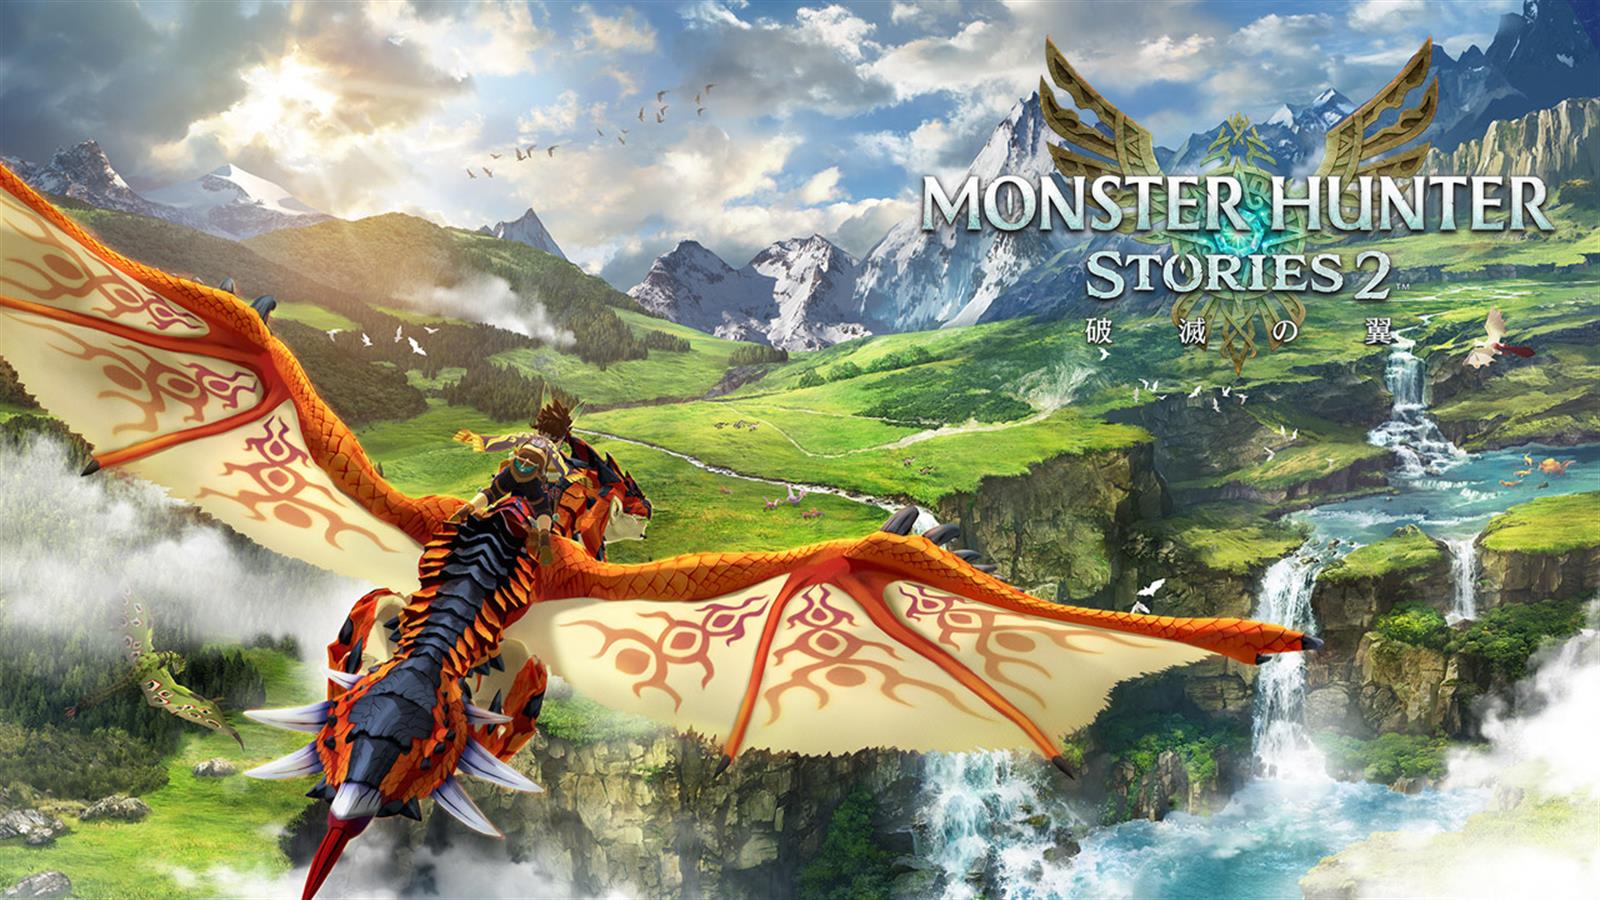 《MONSTER HUNTER STORIES 2: 破滅之翼》將於7月登陸Switch和Steam平台